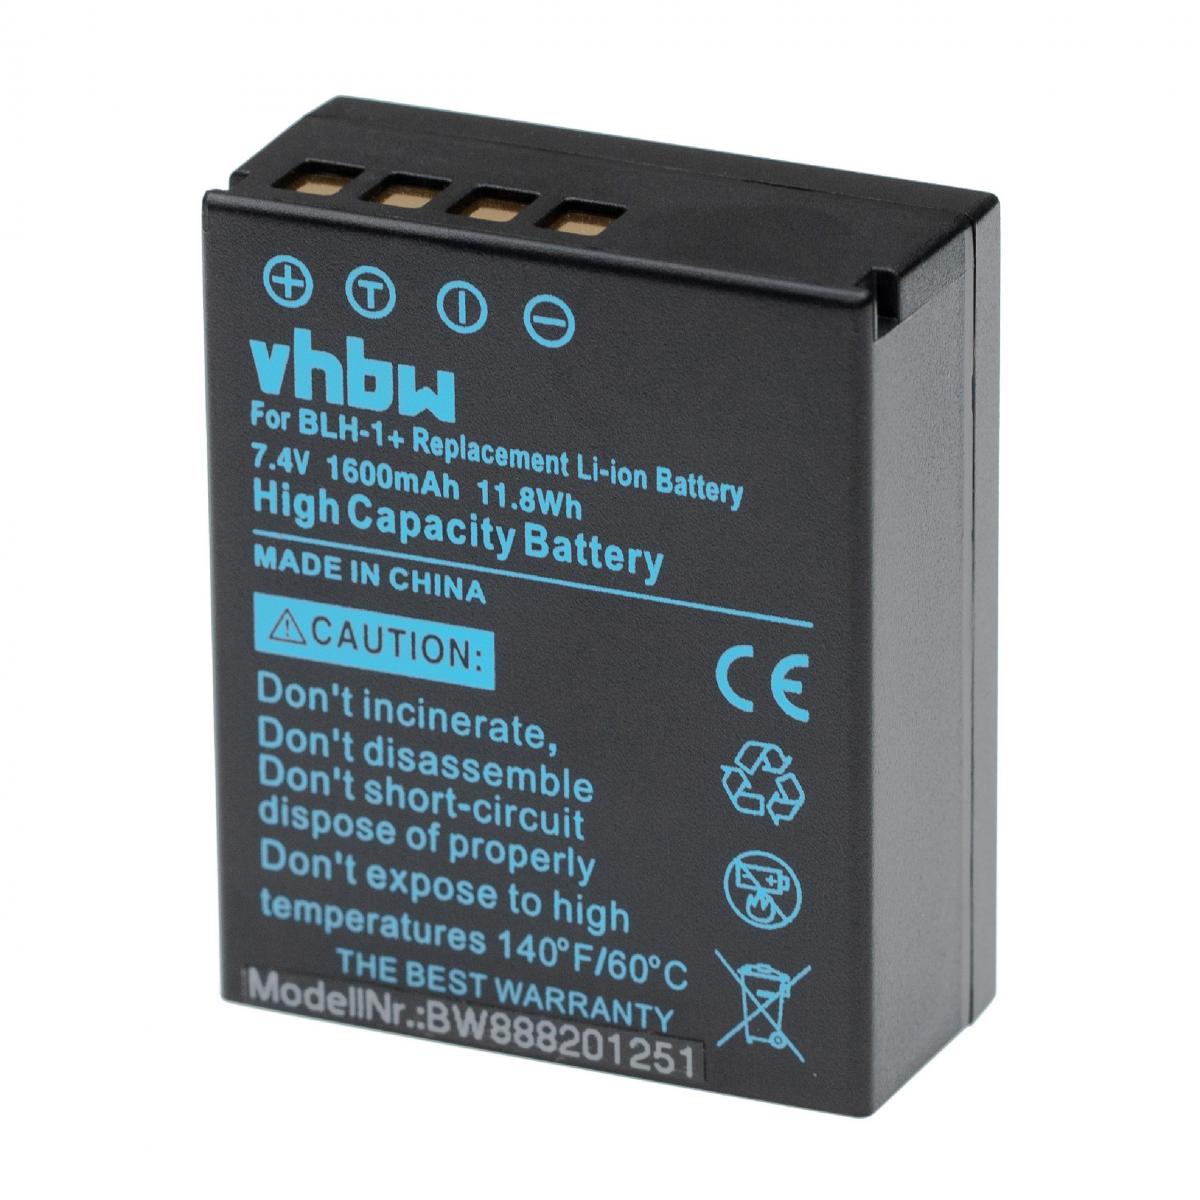 Vhbw - vhbw batterie compatible avec Olympus E-M1 Mark II mirrorless, OM-D appareil photo DSLR (1600mAh, 7,4V, Li-Ion) avec puce d'information - Batterie Photo & Video